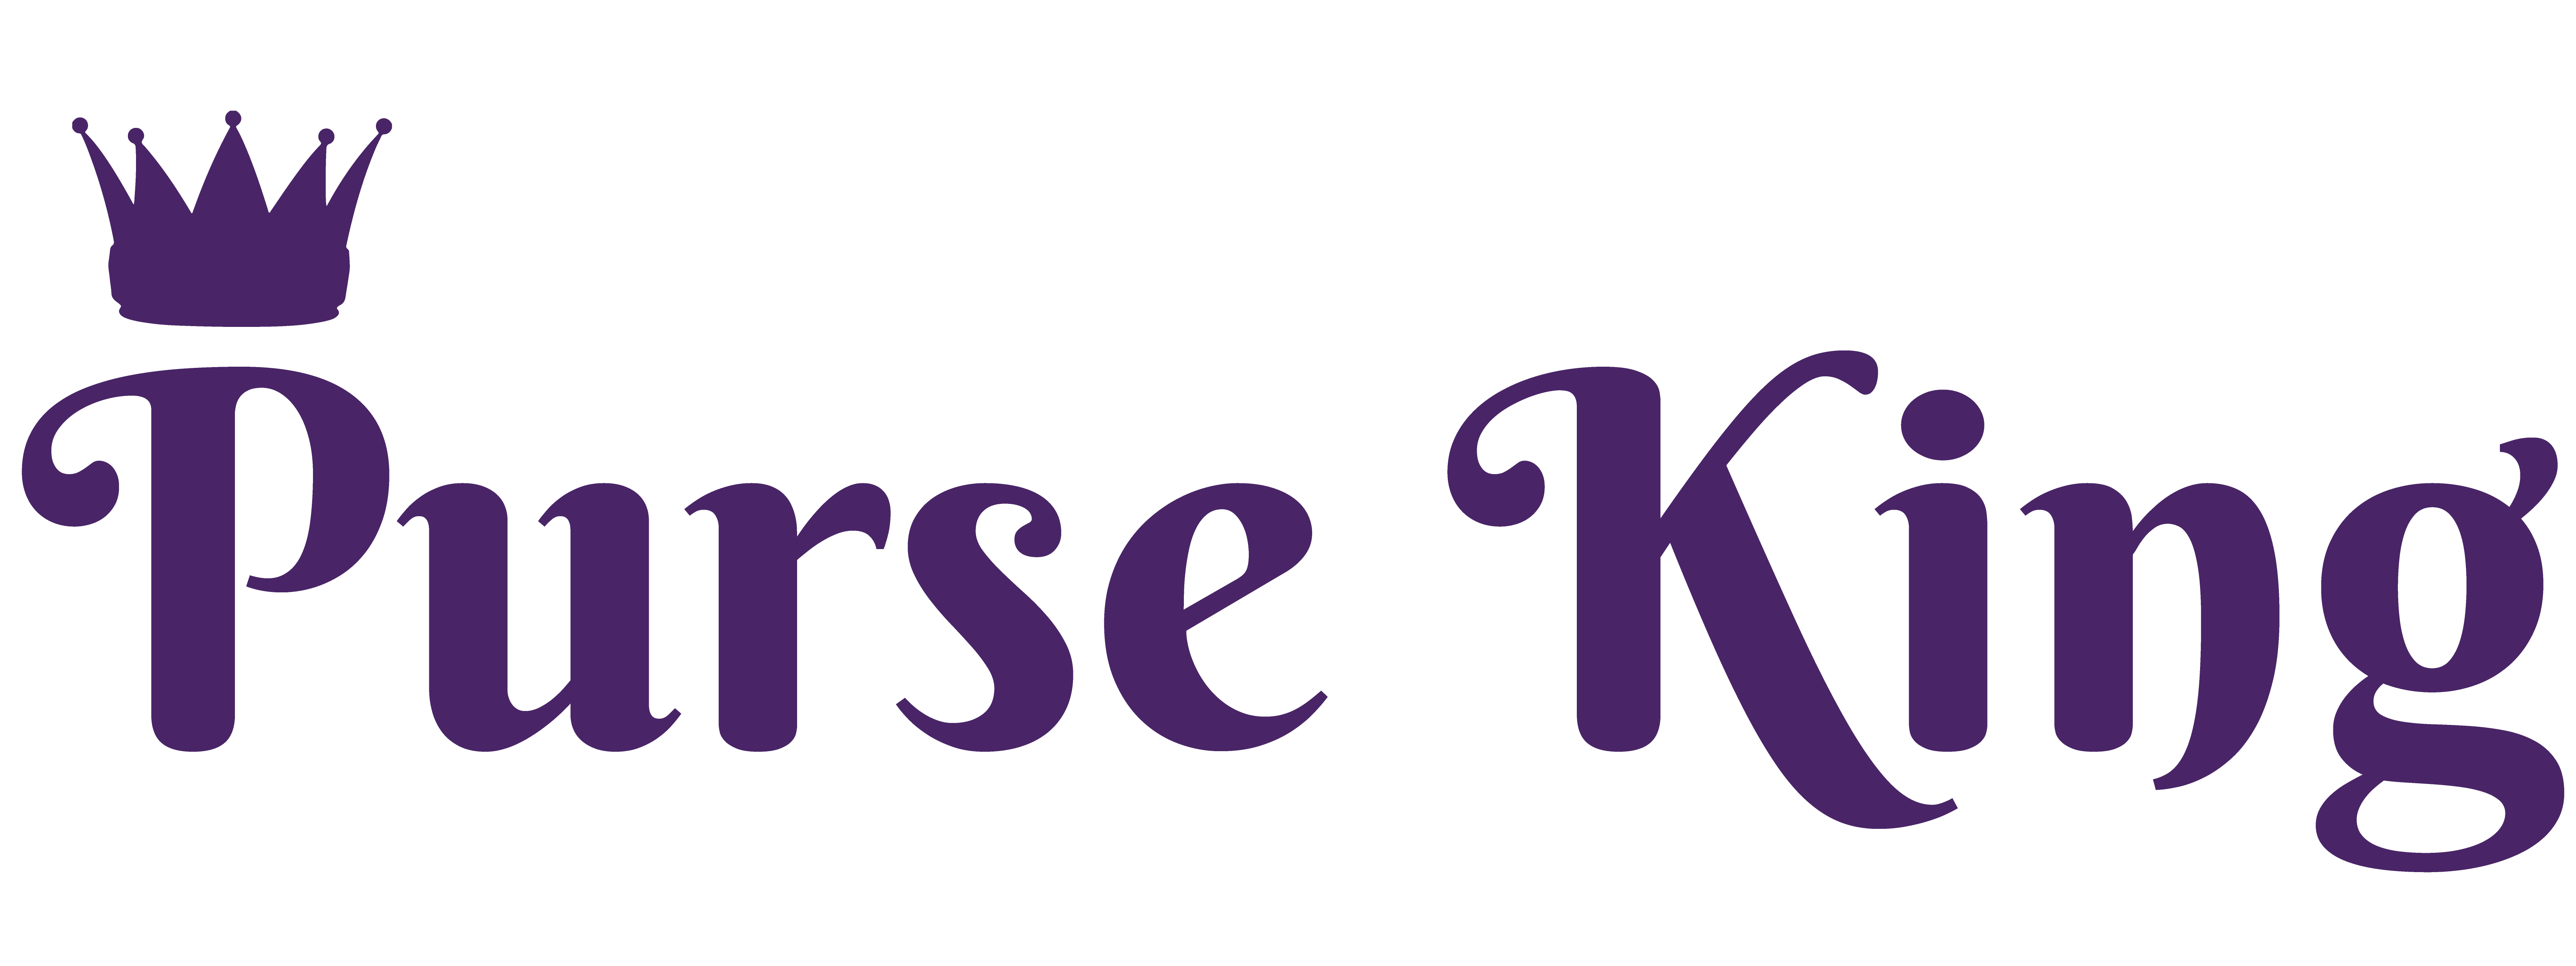 Purse Logo - The City Collection – Purse King